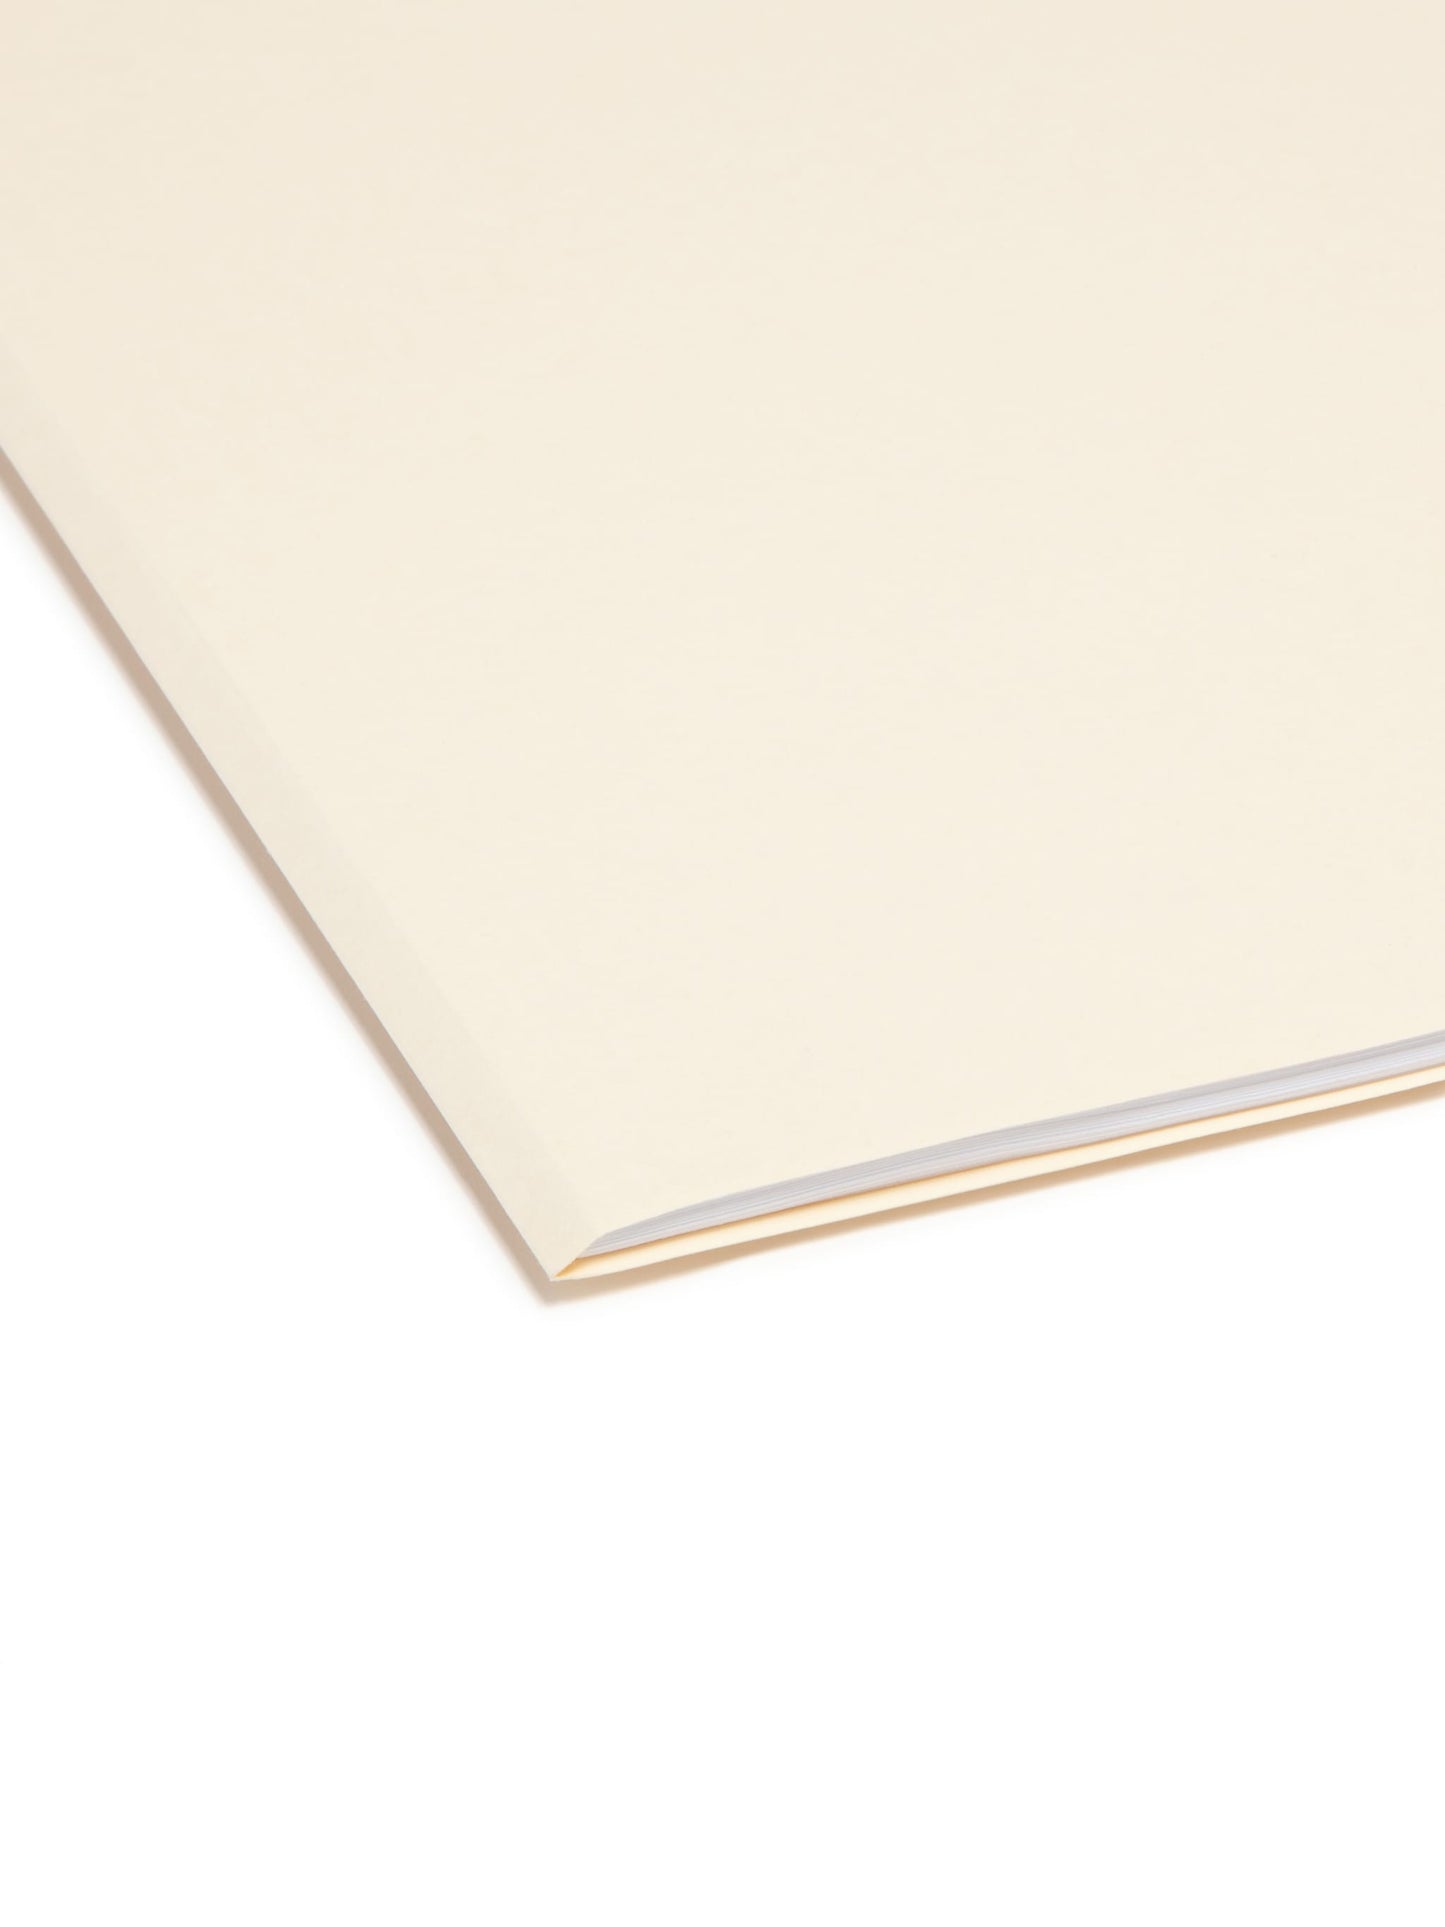 Standard File Folders, 1/3-Cut Left Tab, Manila Color, Legal Size, Set of 100, 086486153317